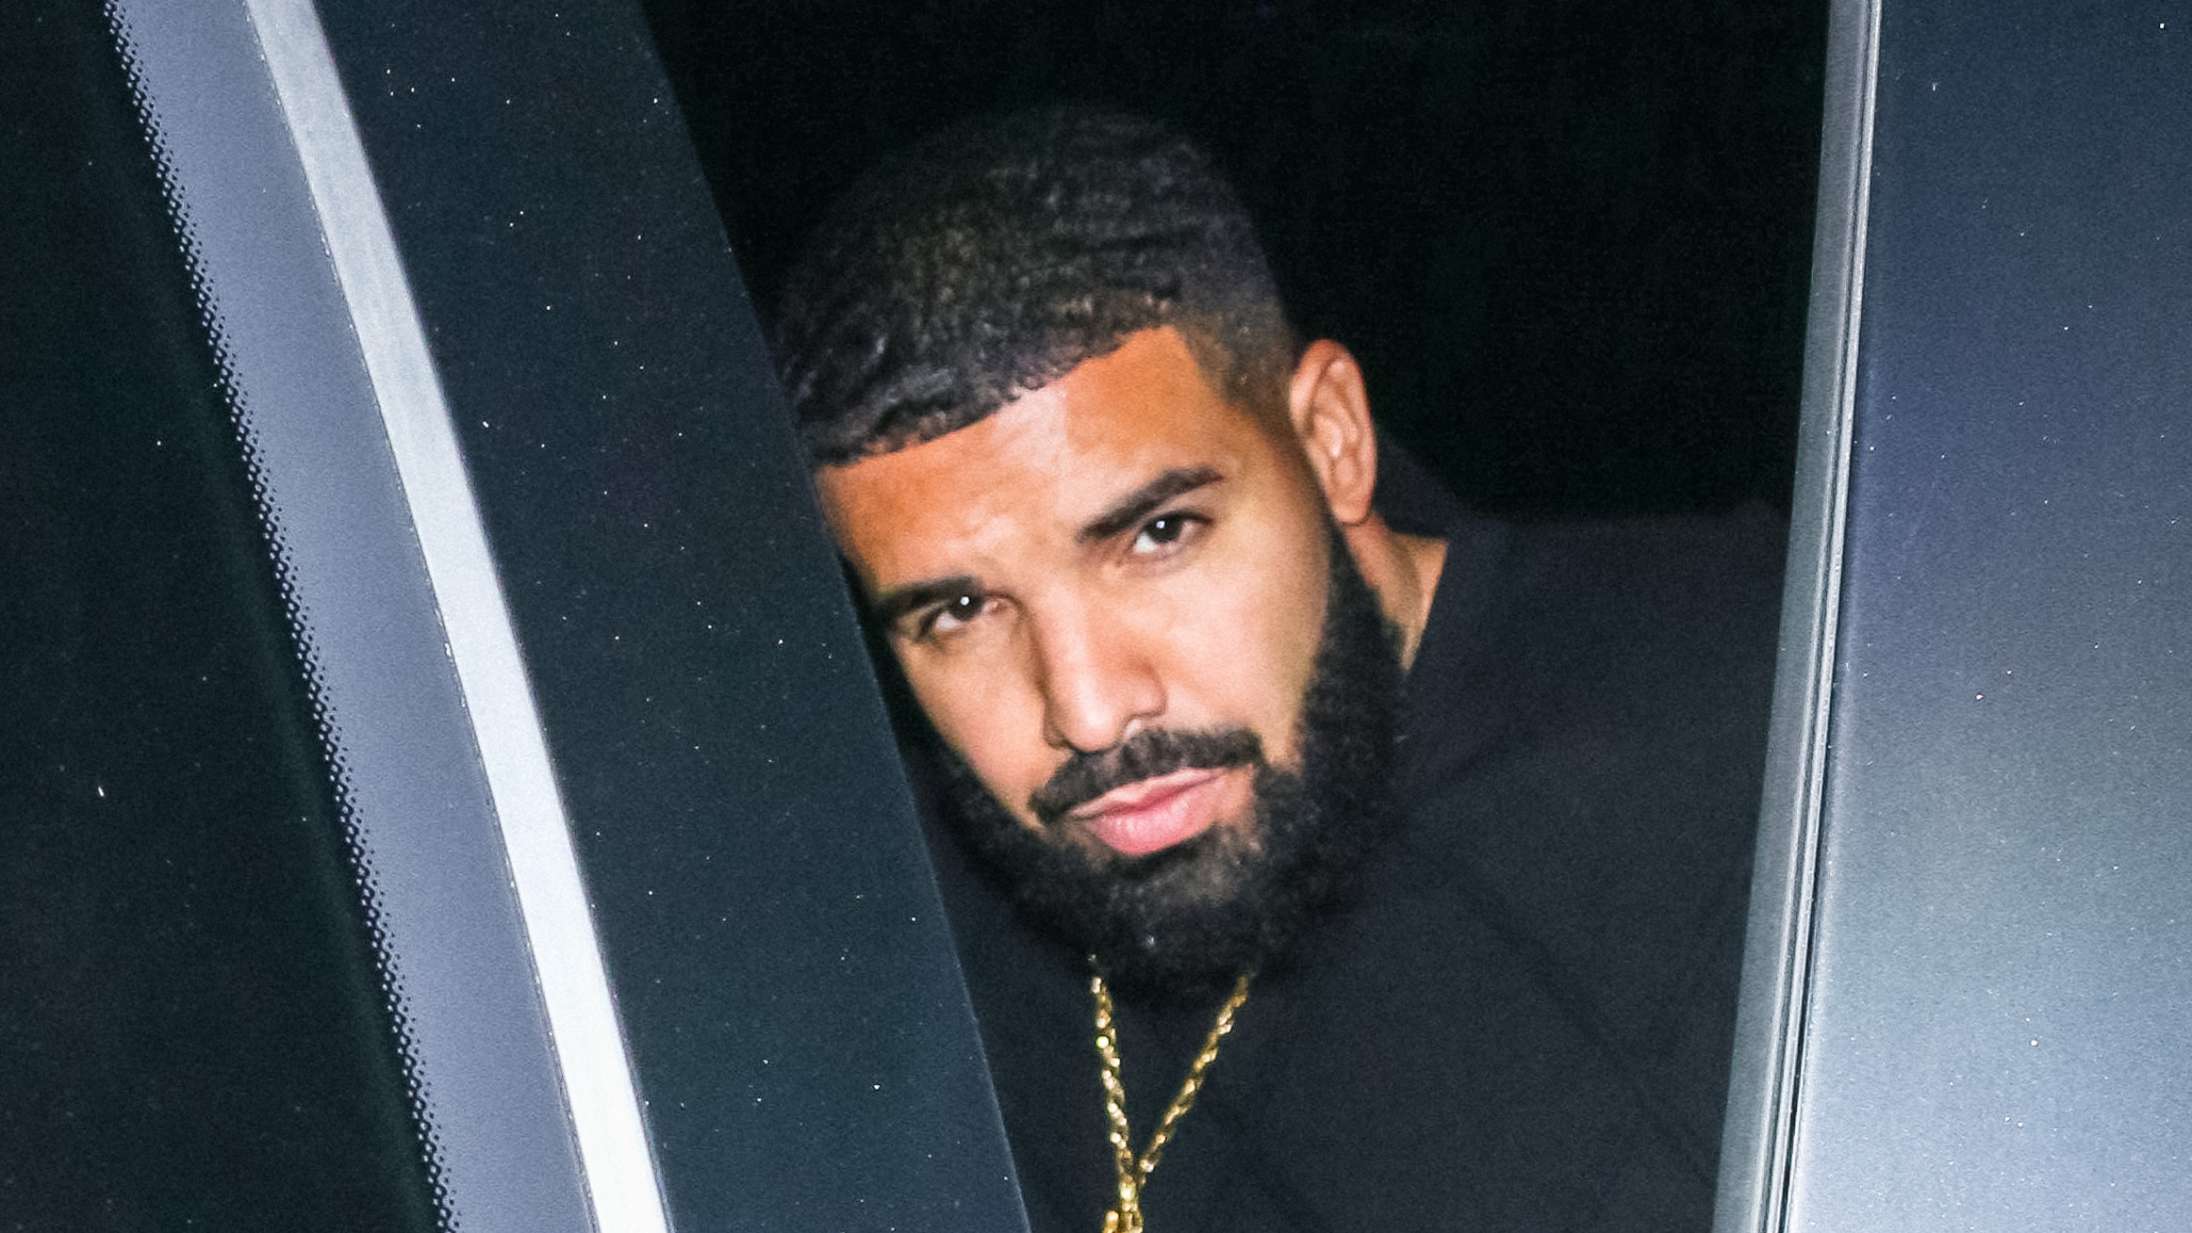 Ups: Har Amazon Music lige afsløret udgivelsesdatoen for Drakes nye album, ‘For All the Dogs’?